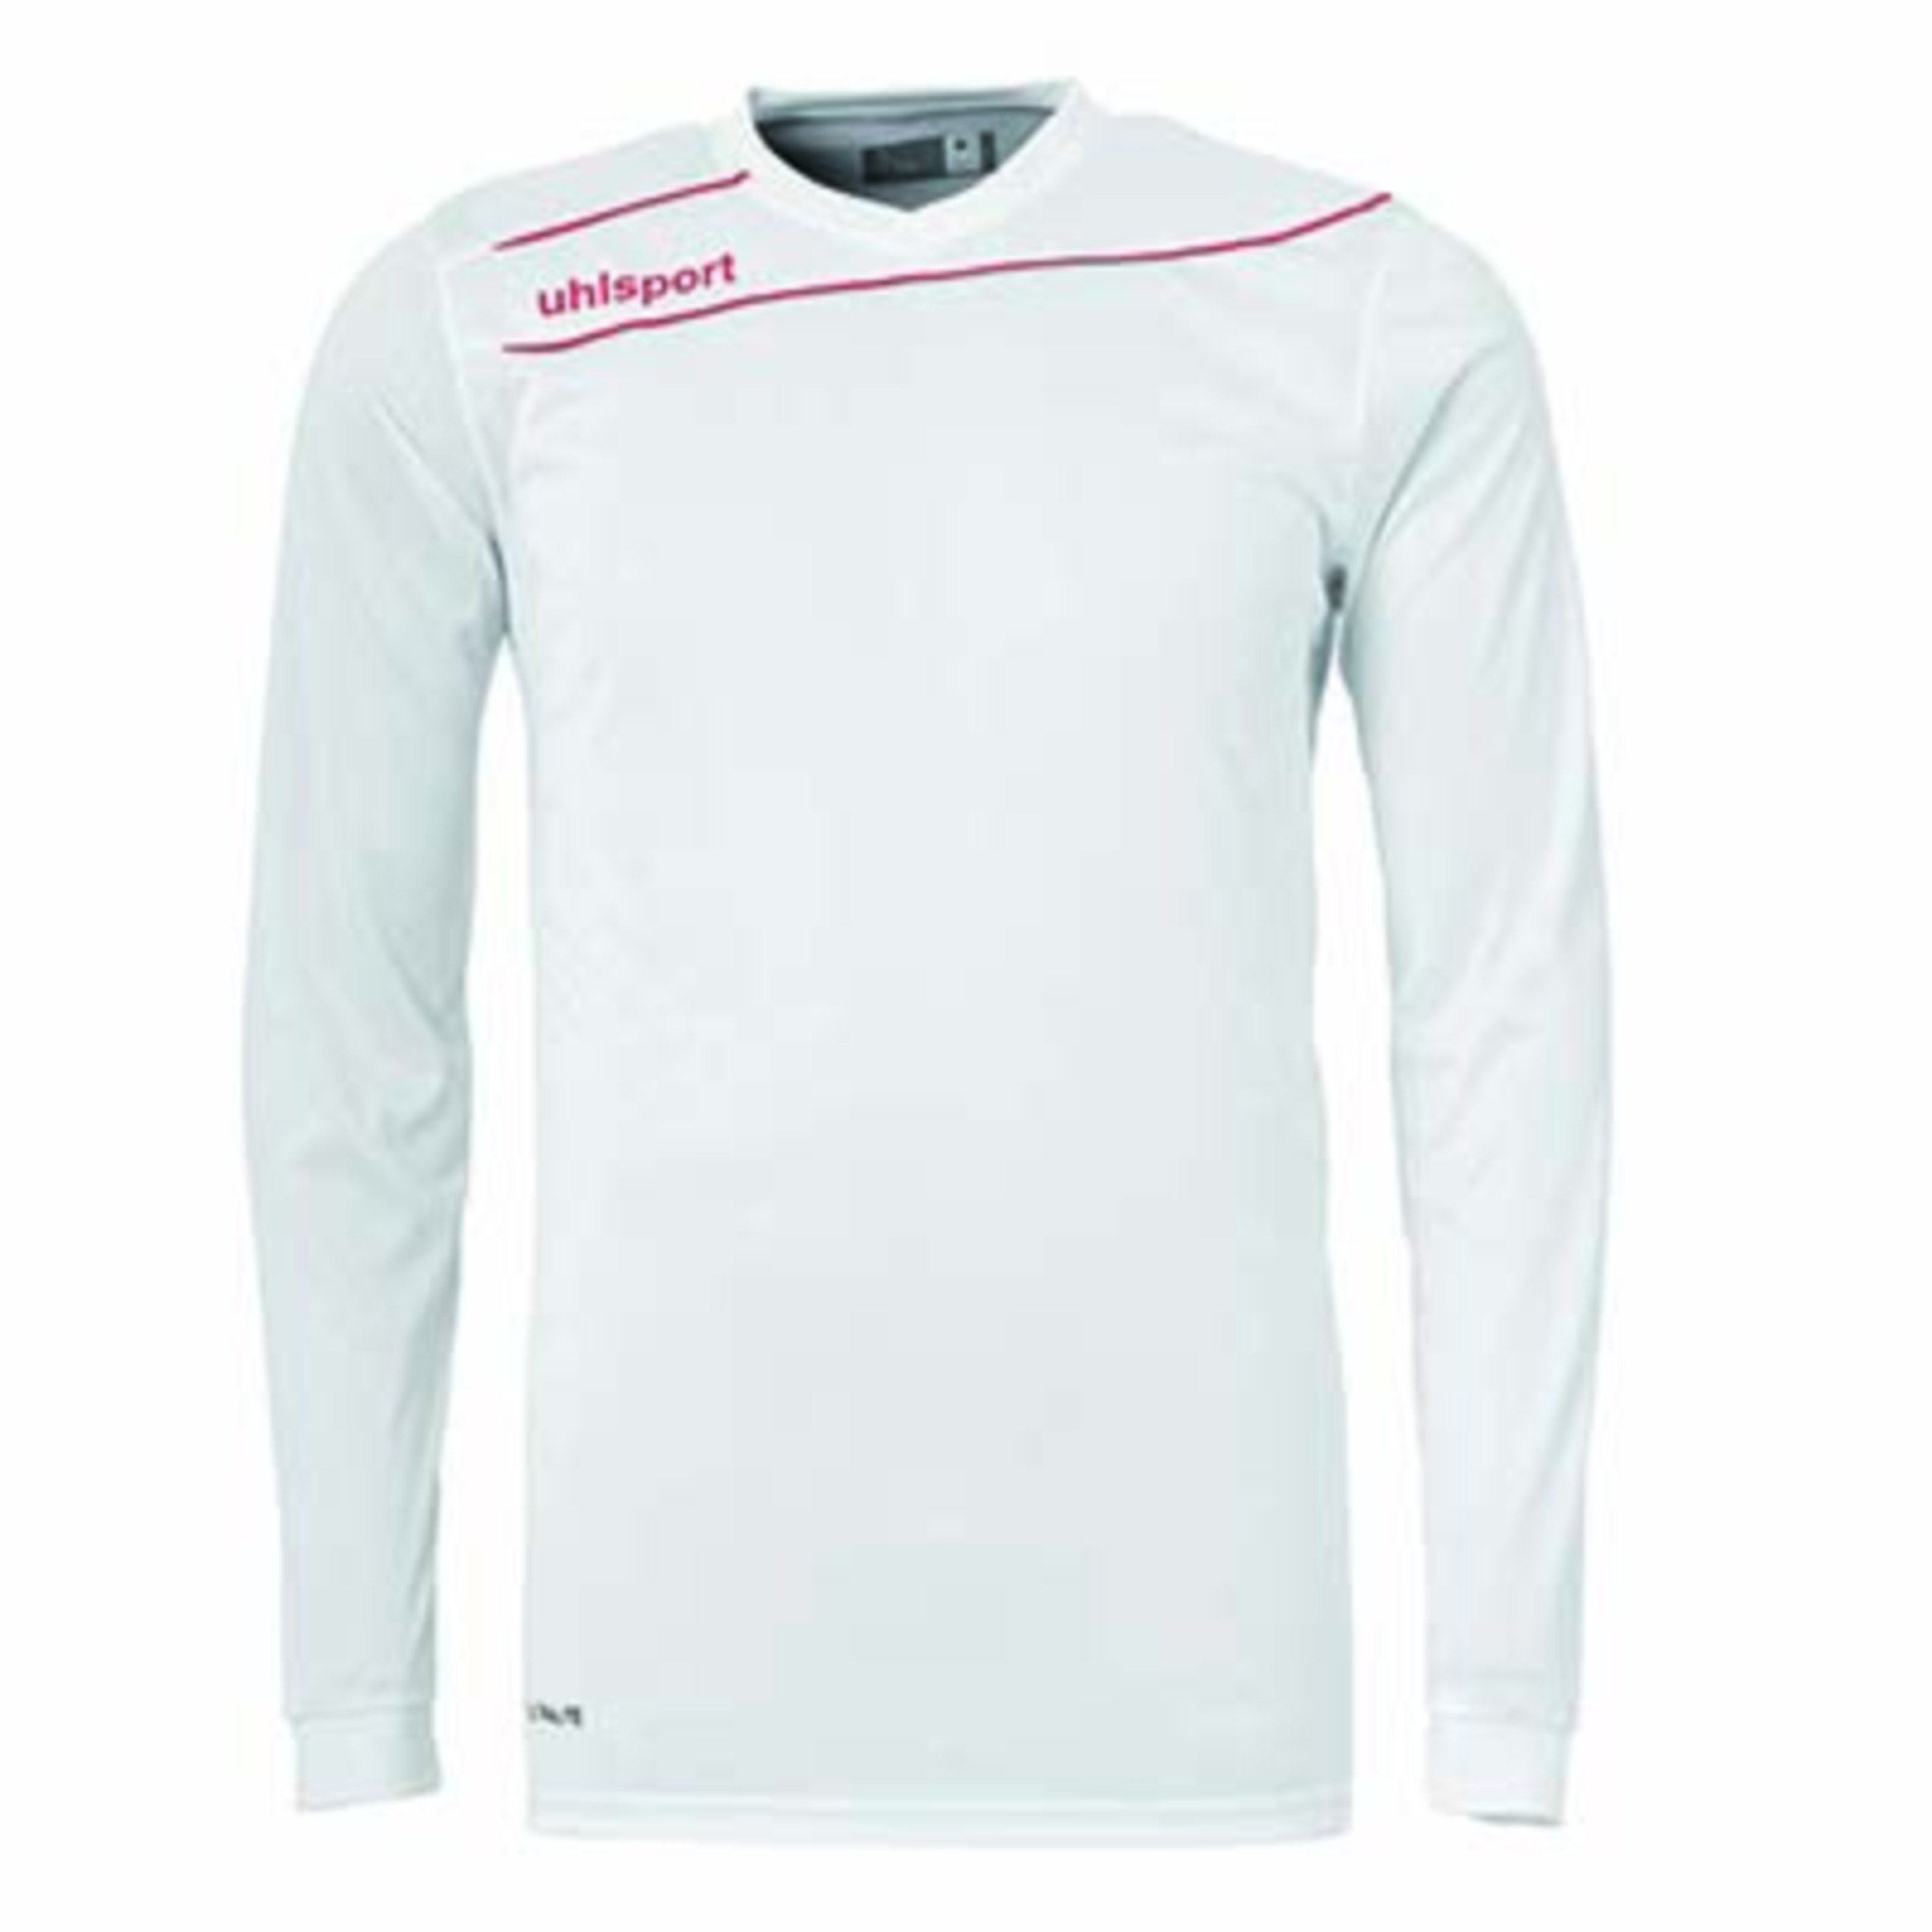 Stream 3.0 Camiseta Ml Blanco/rojo Uhlsport